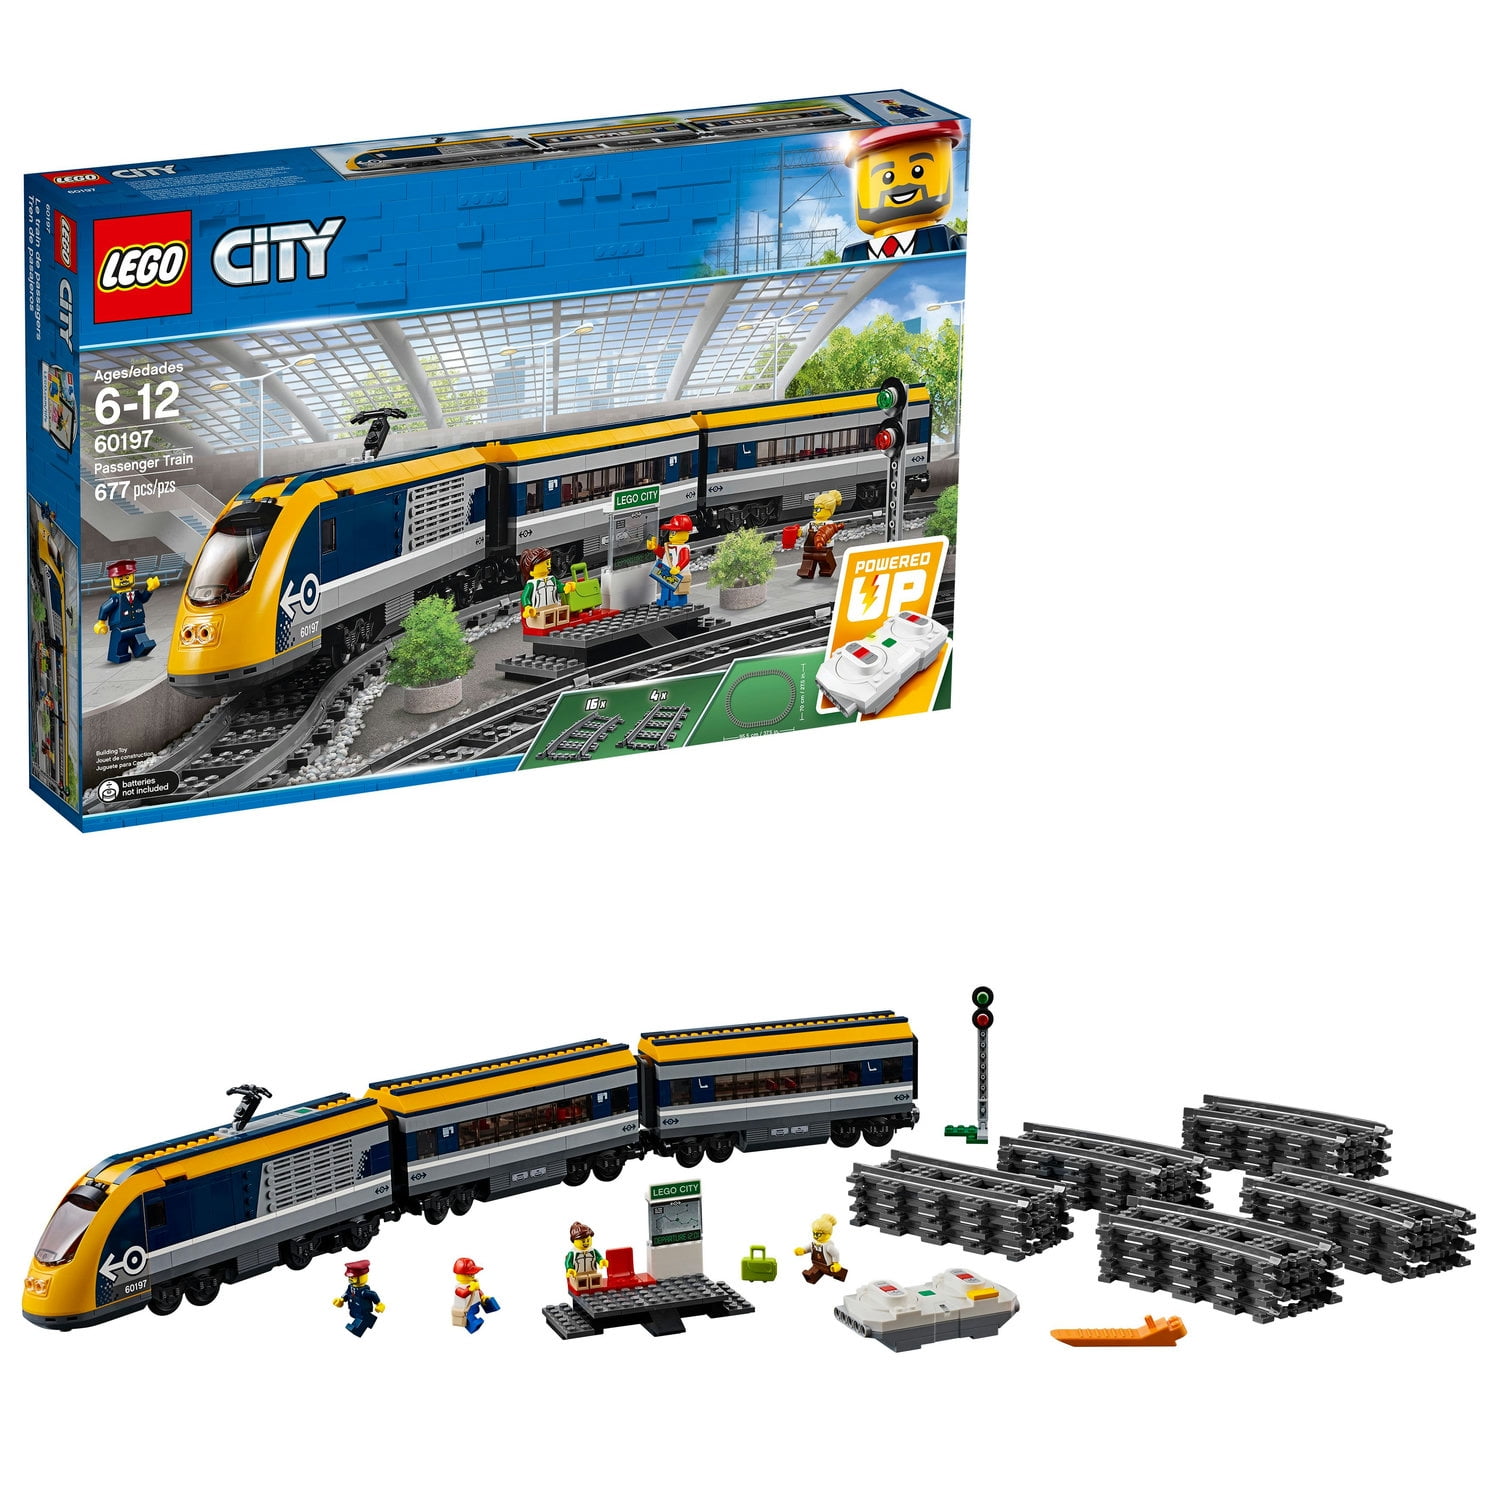 60197 Lego City Passenger Train 